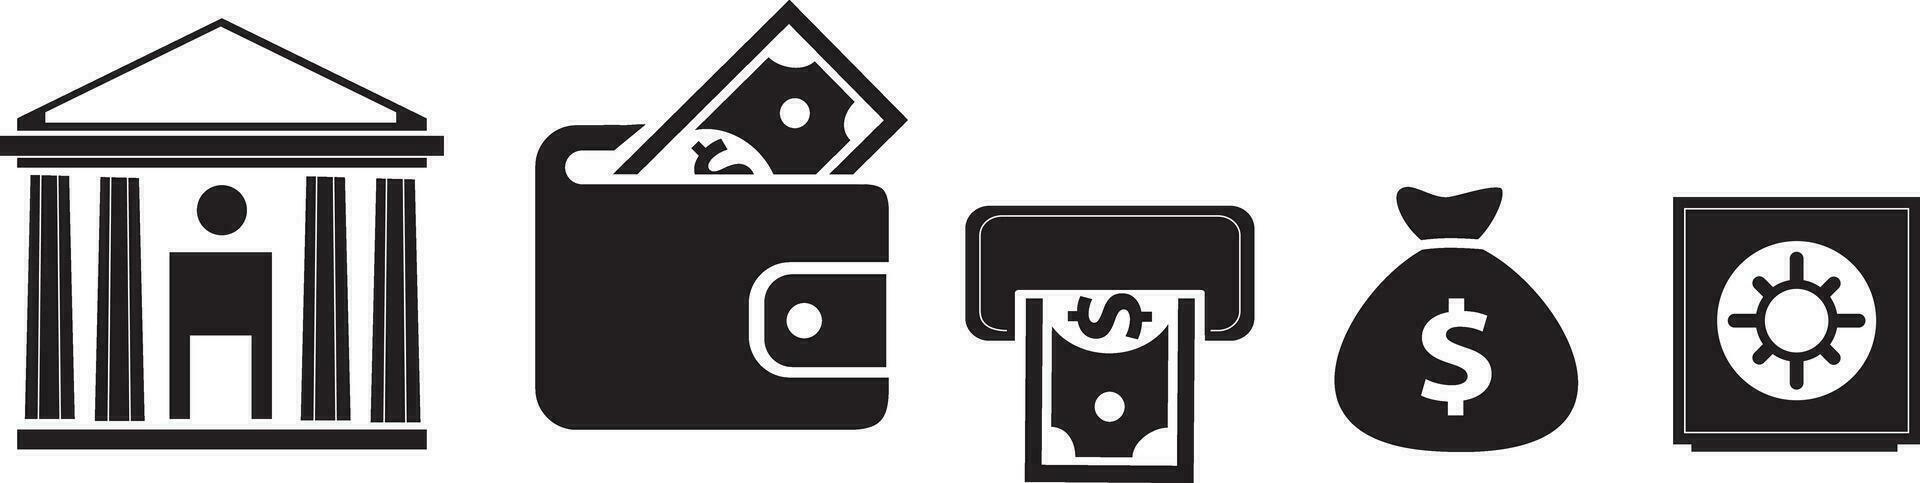 Bank and finance icon set. Bank building, cash, ATM, money bag, safe icon silhouette, vector. vector